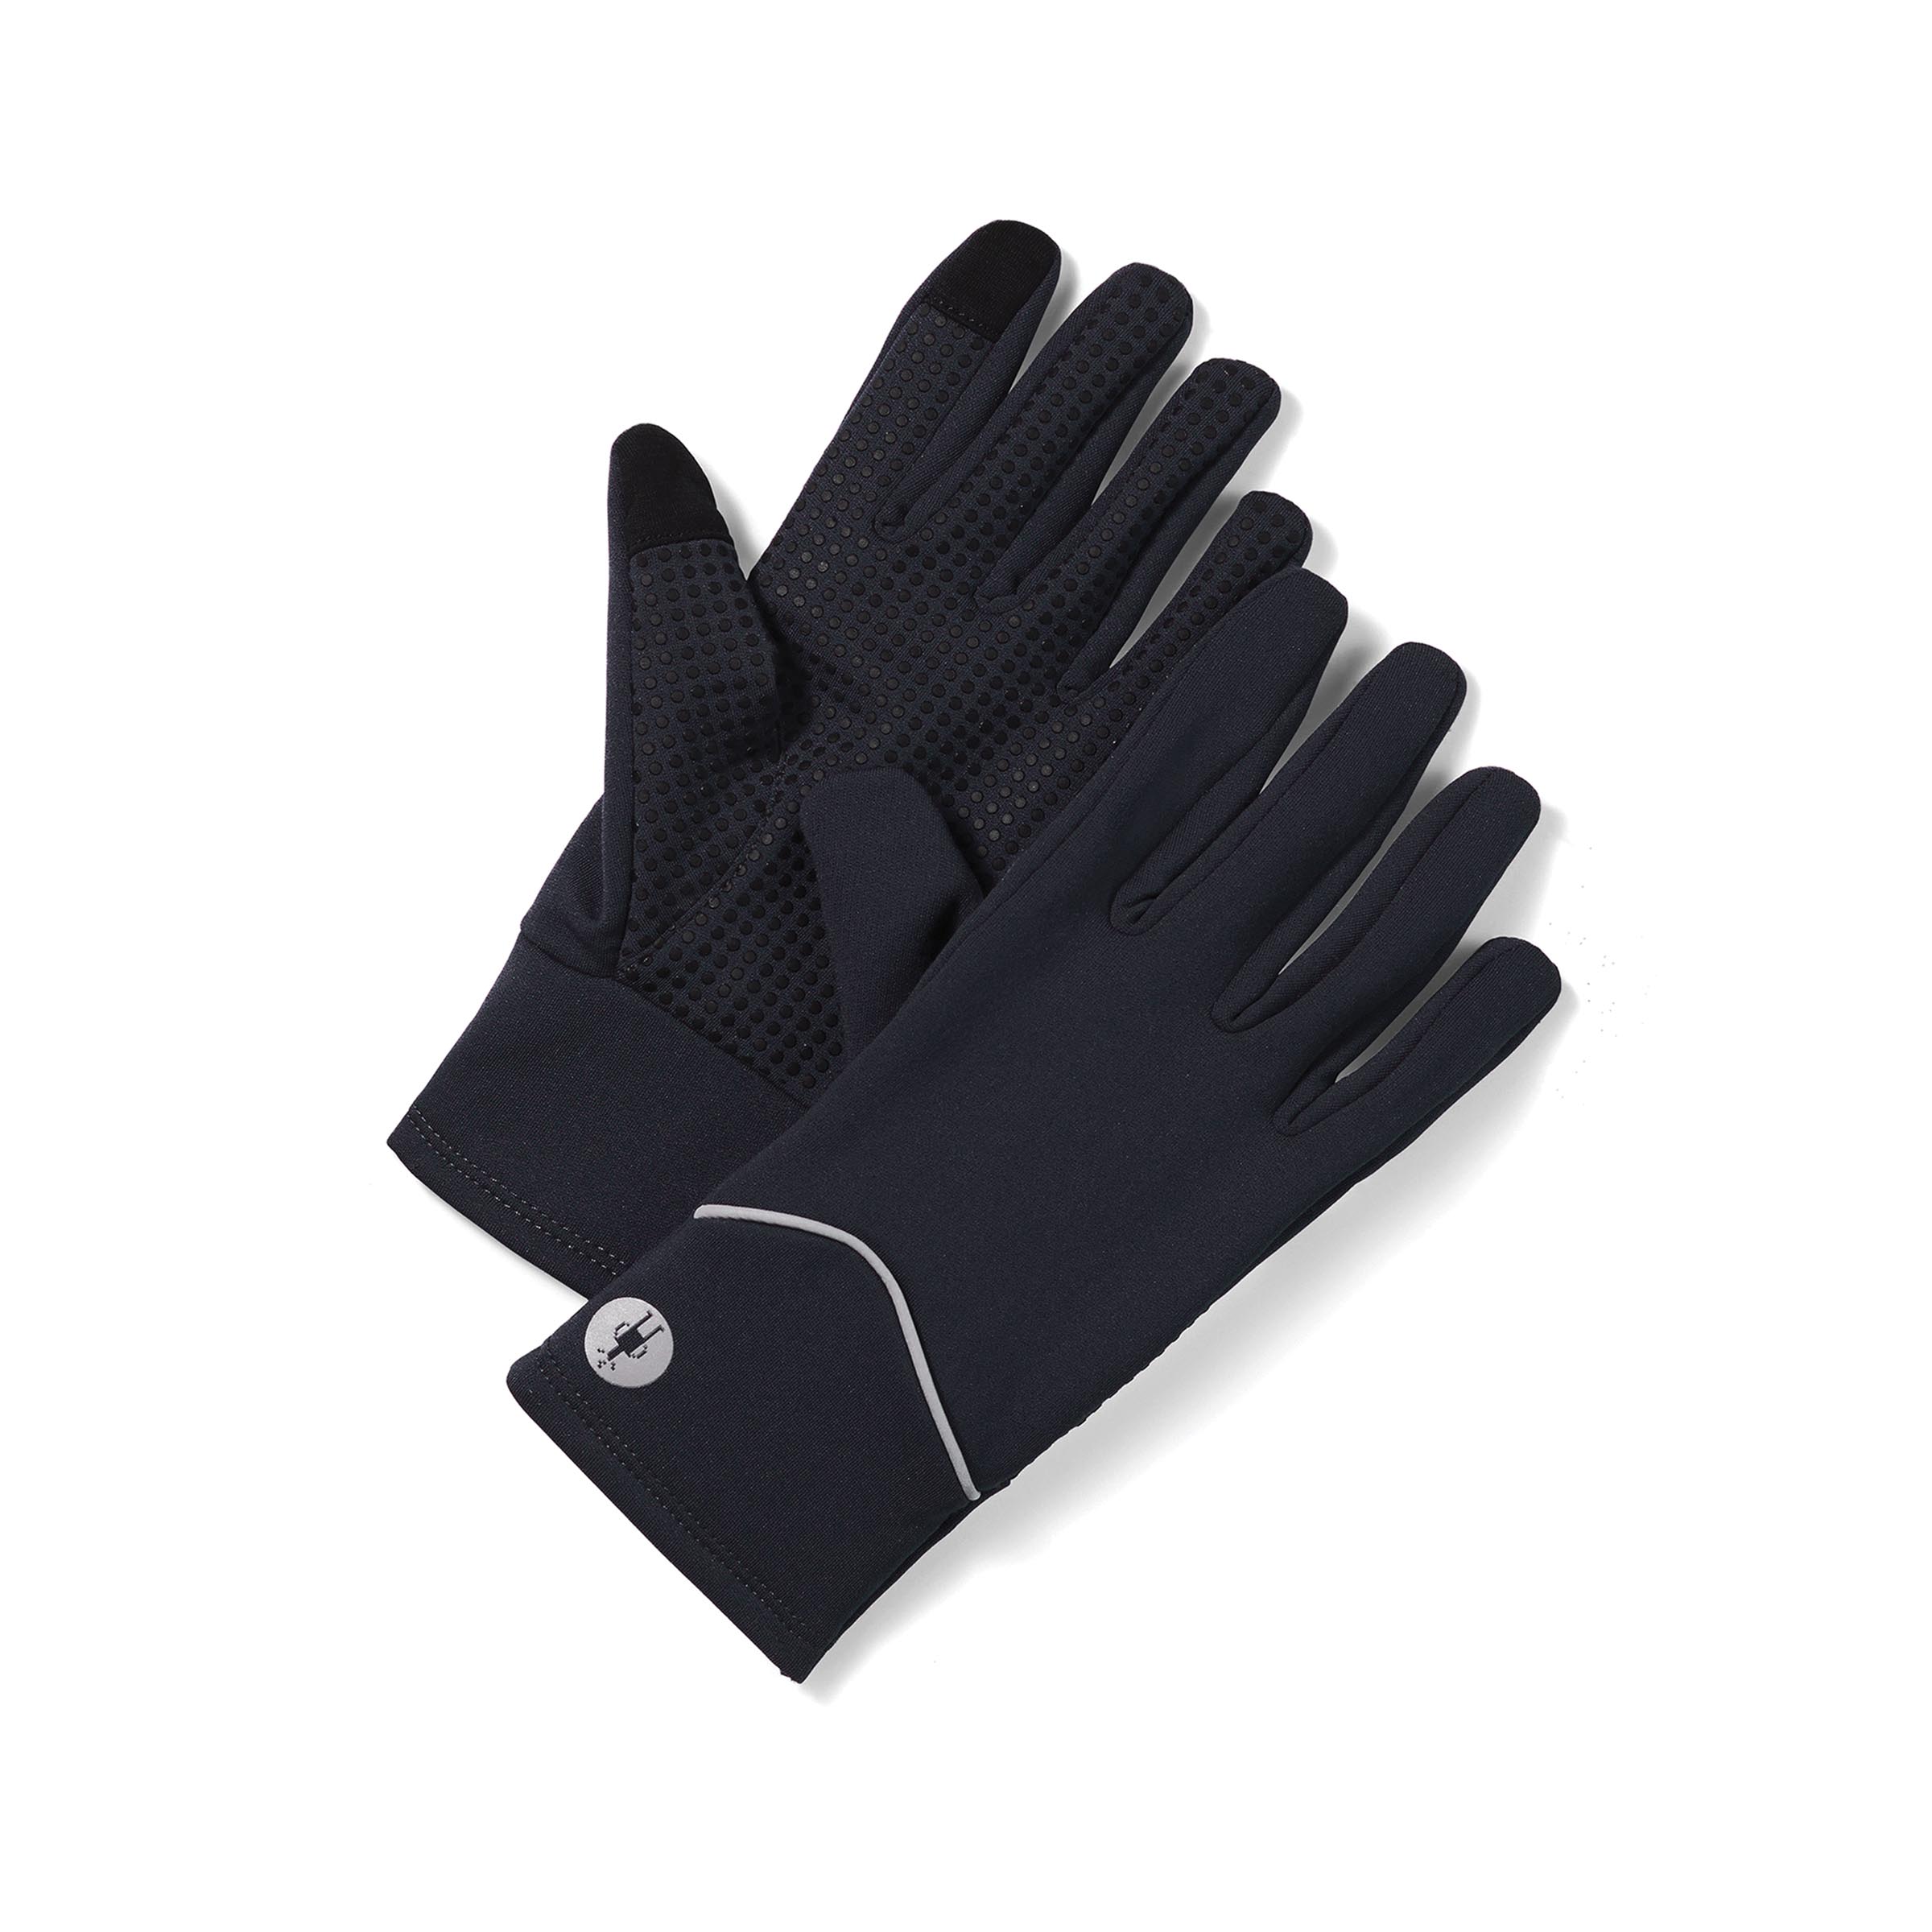 Thermal Merino Handschuhe col. Grau | Smartwool